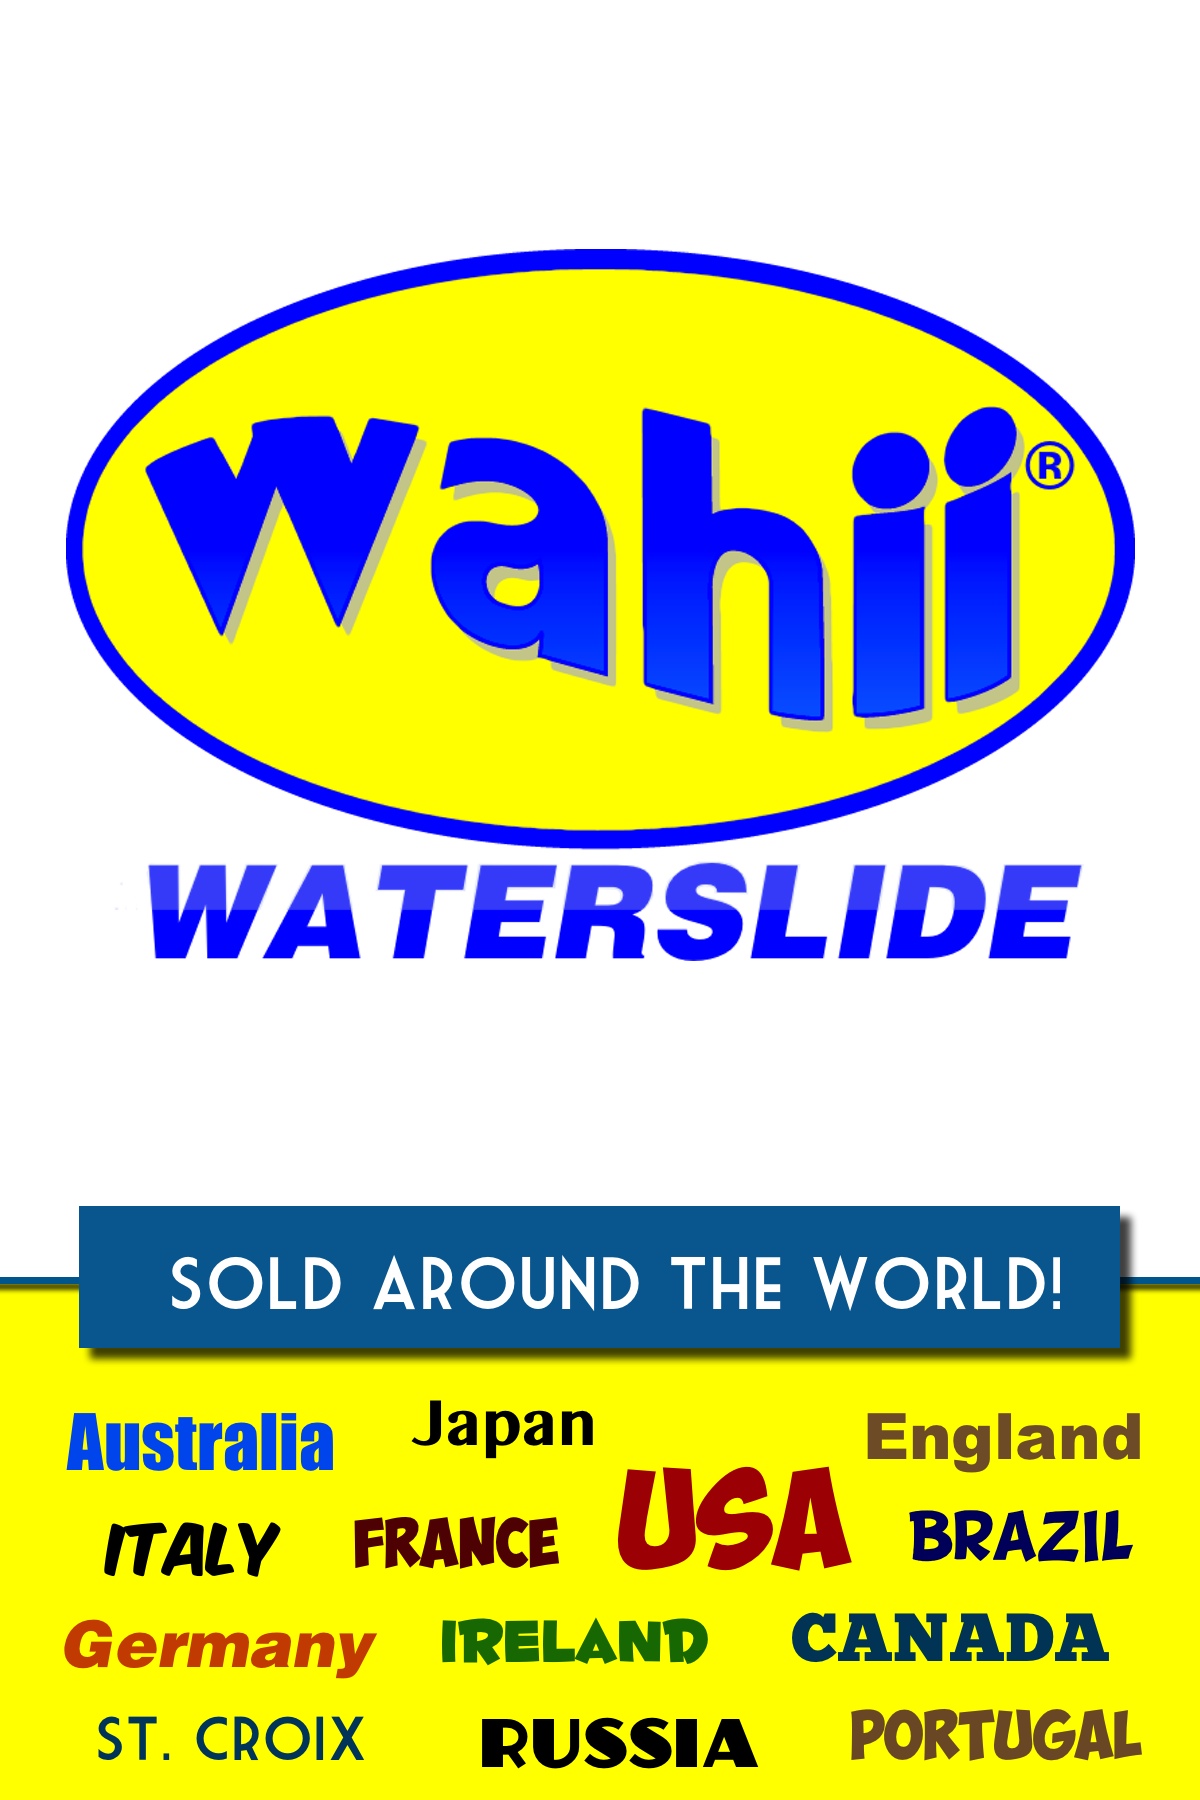 sold-around-the-world-giant-slip-n-slide-wahii-banzai-slide